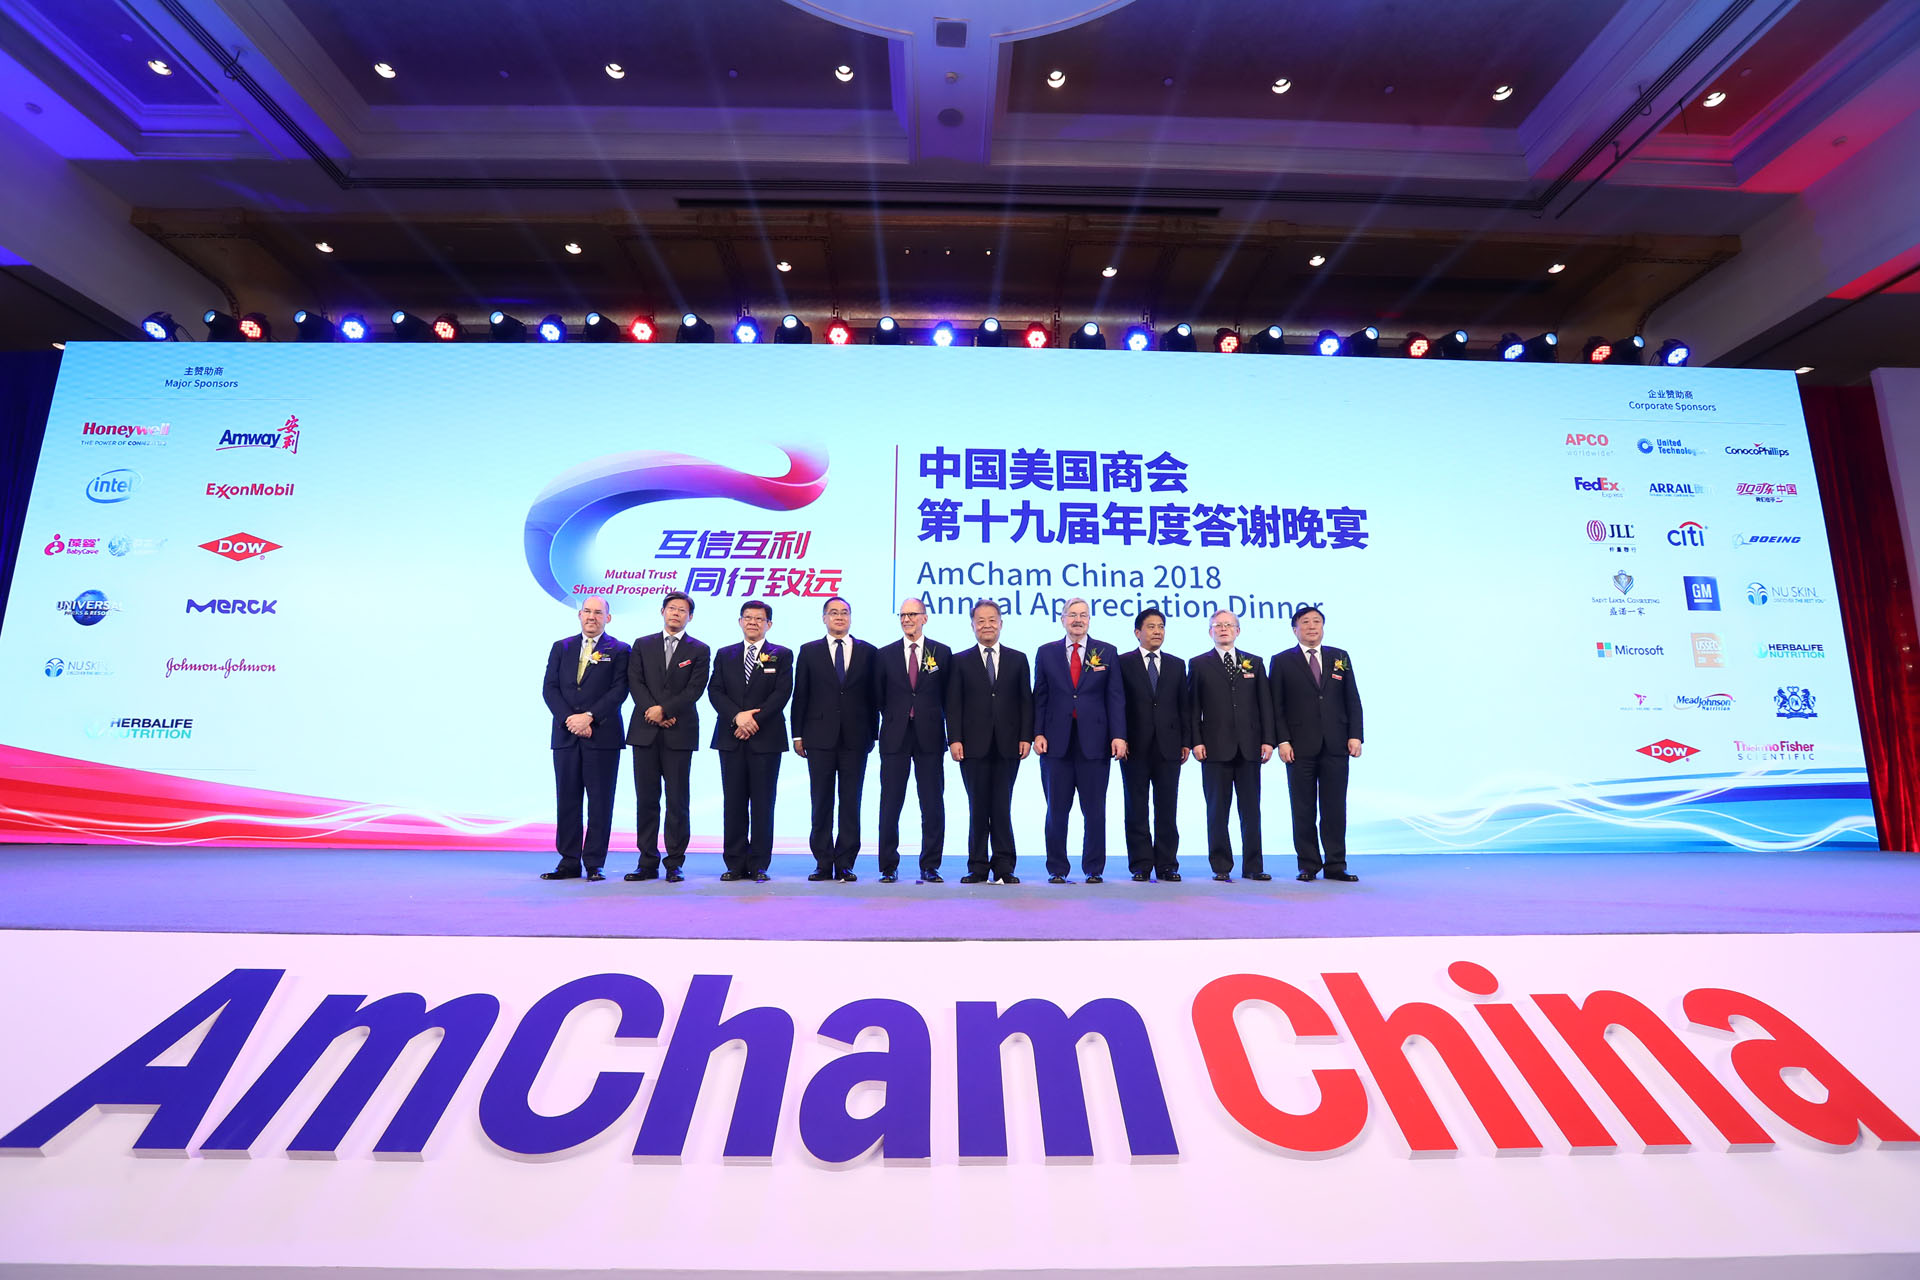 AmCham China Events